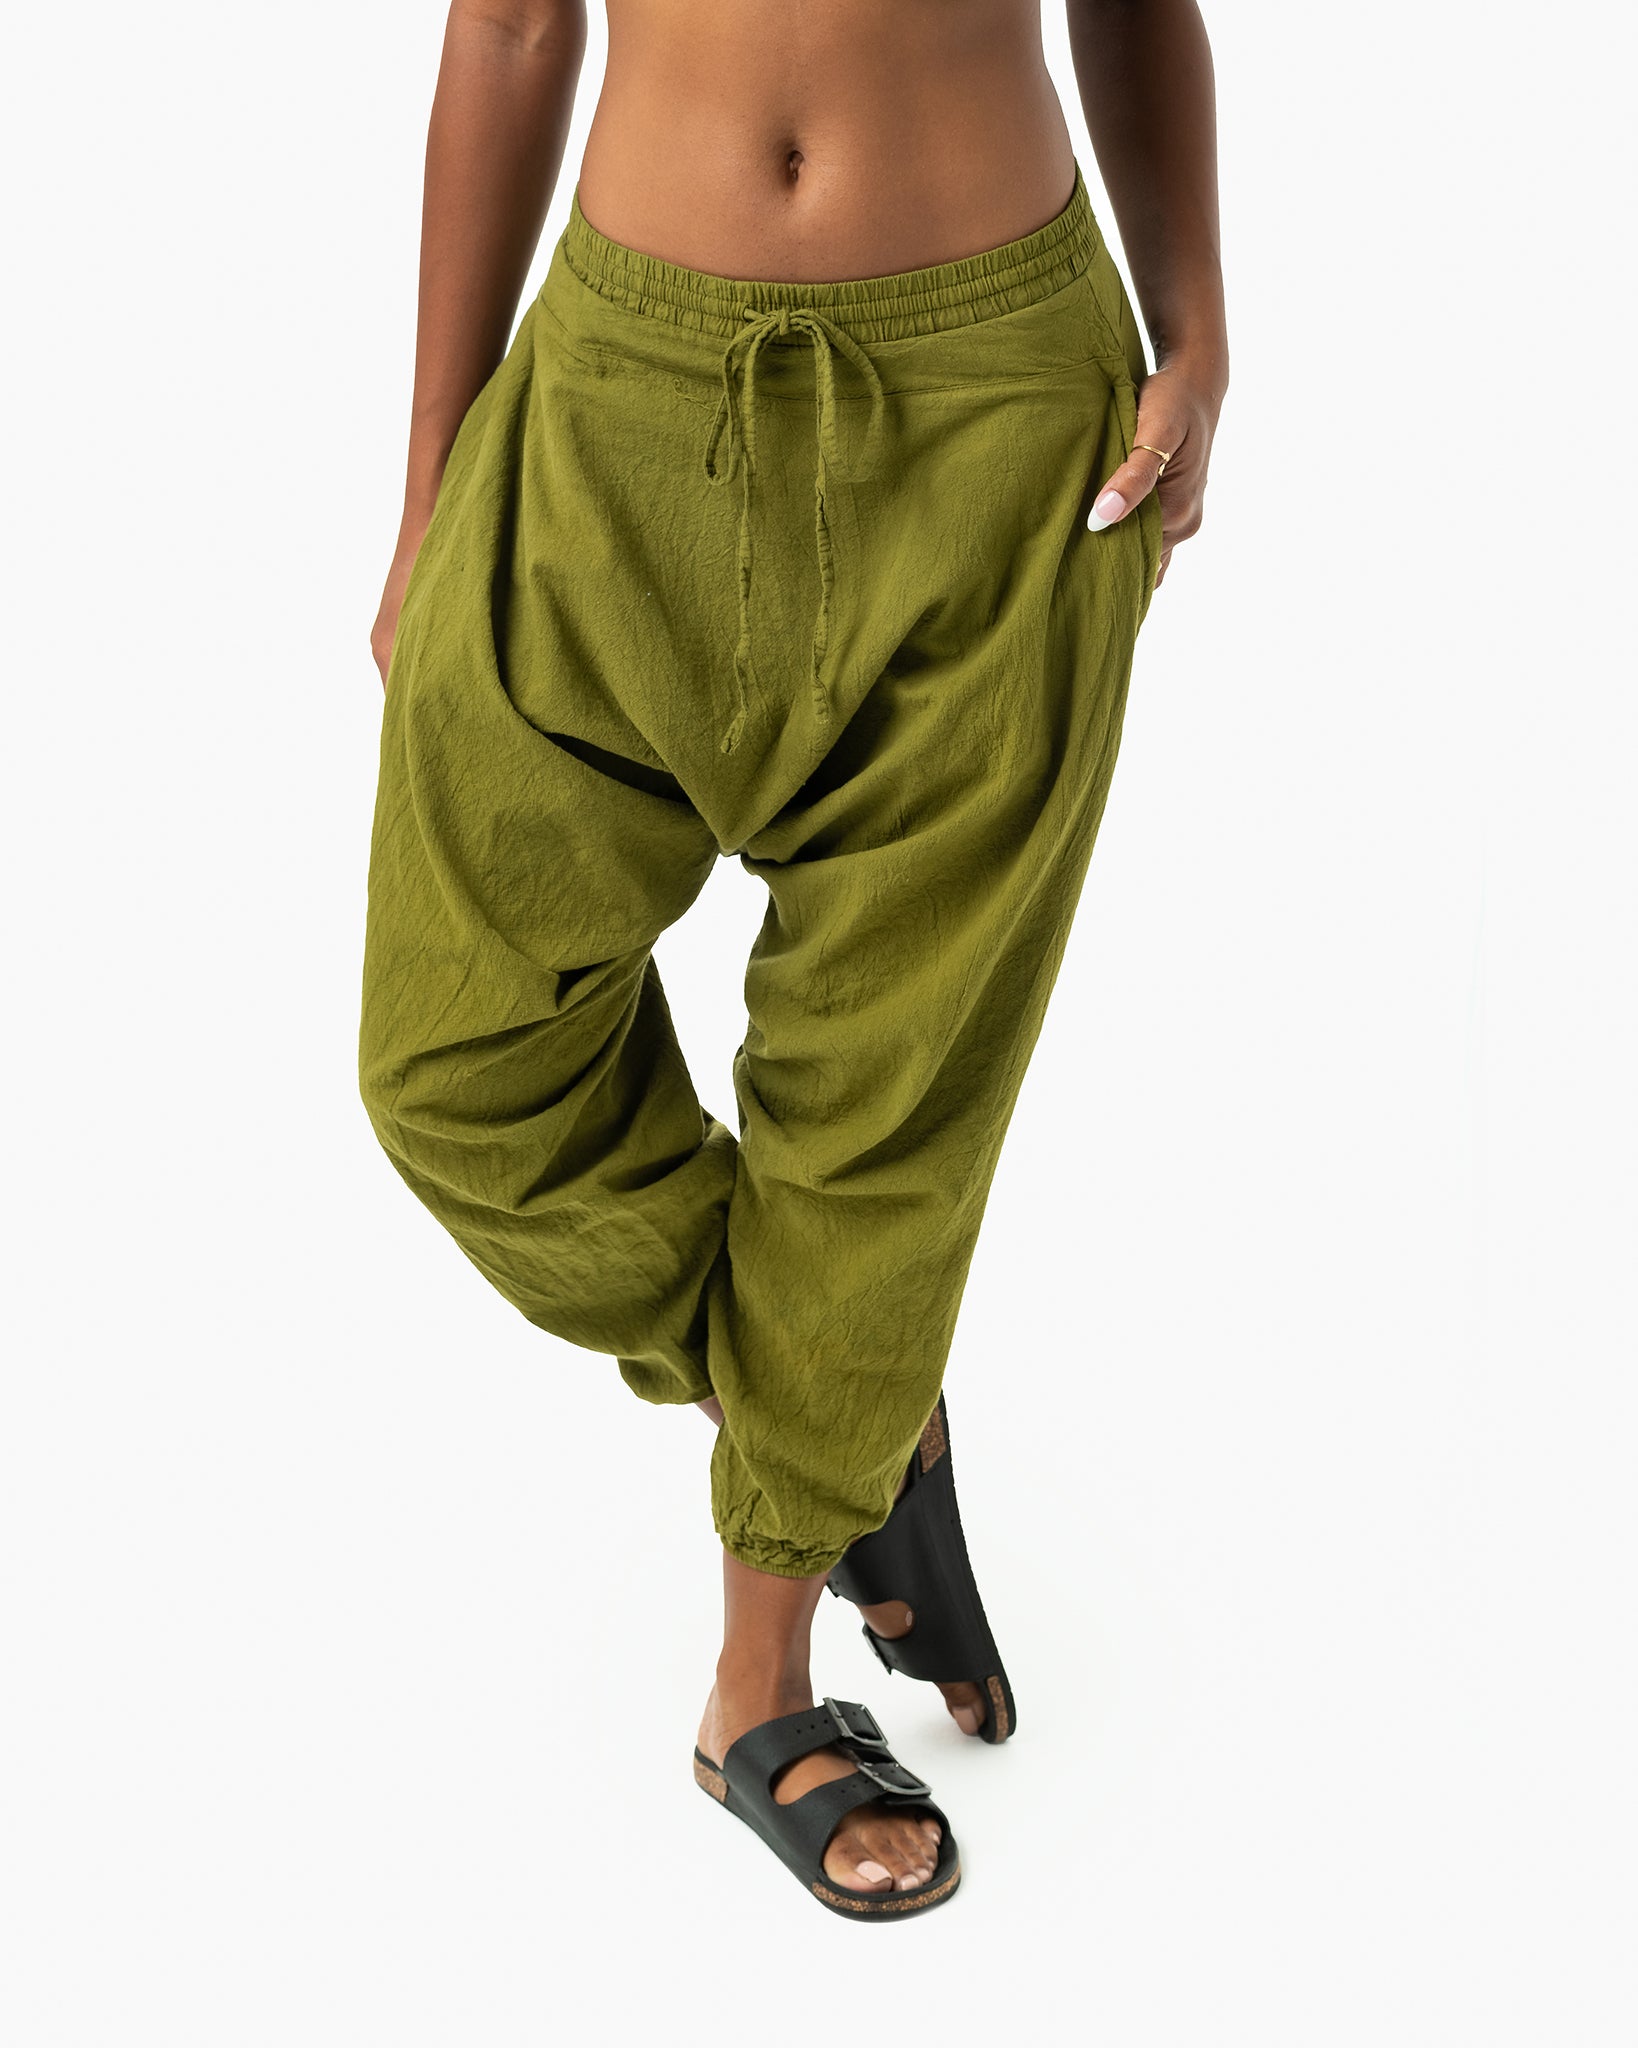 Drop Crotch Harem Pants for Men Big and Tall Elastic Waist Casual Pants  Bohemian Pilate Beach Boho Baggy Yoga Pants Black